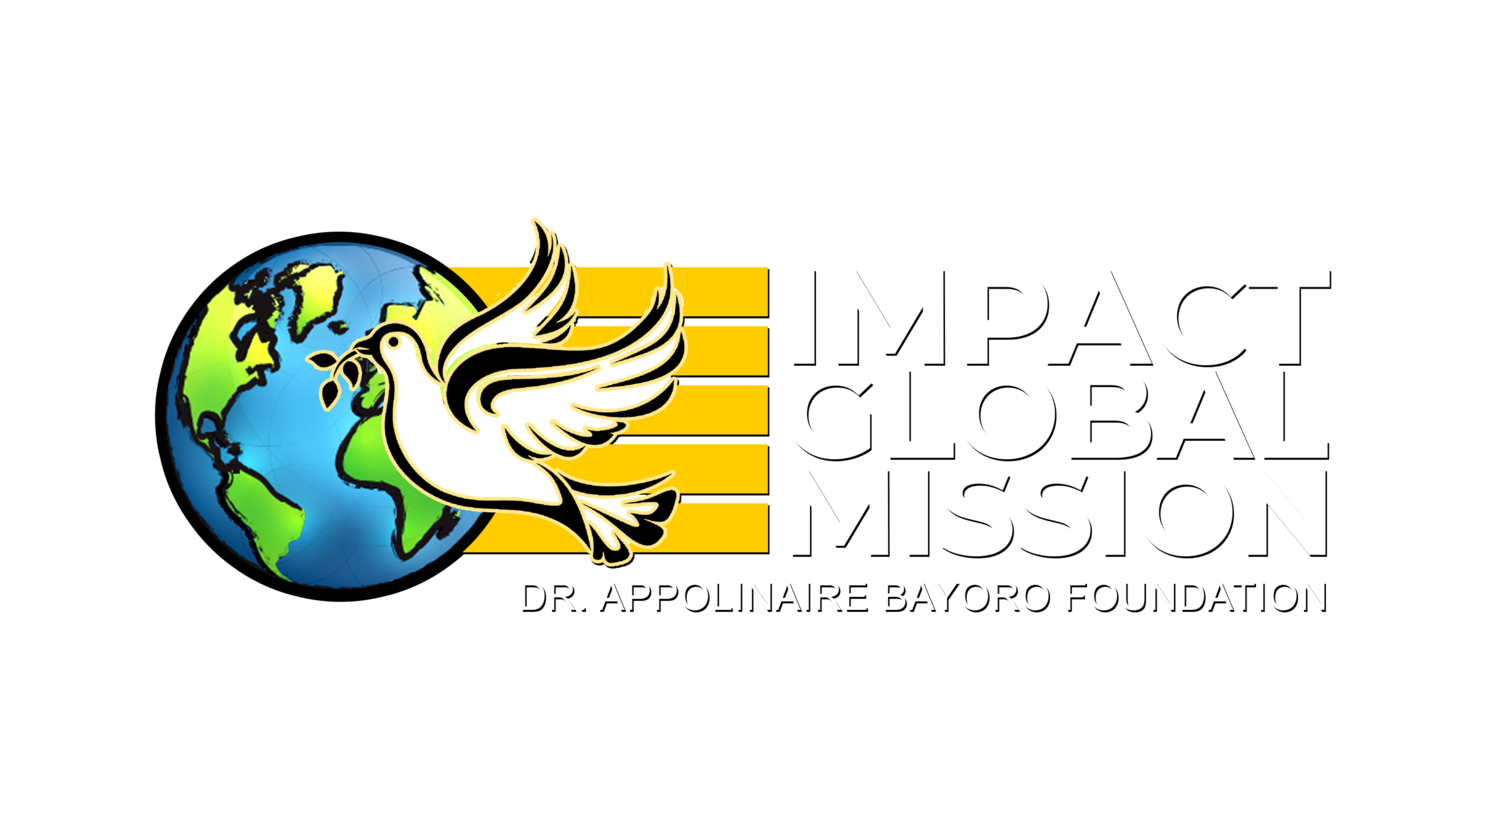 Impact Global Mission, Dr. Appolinaire Bayoro Foundation